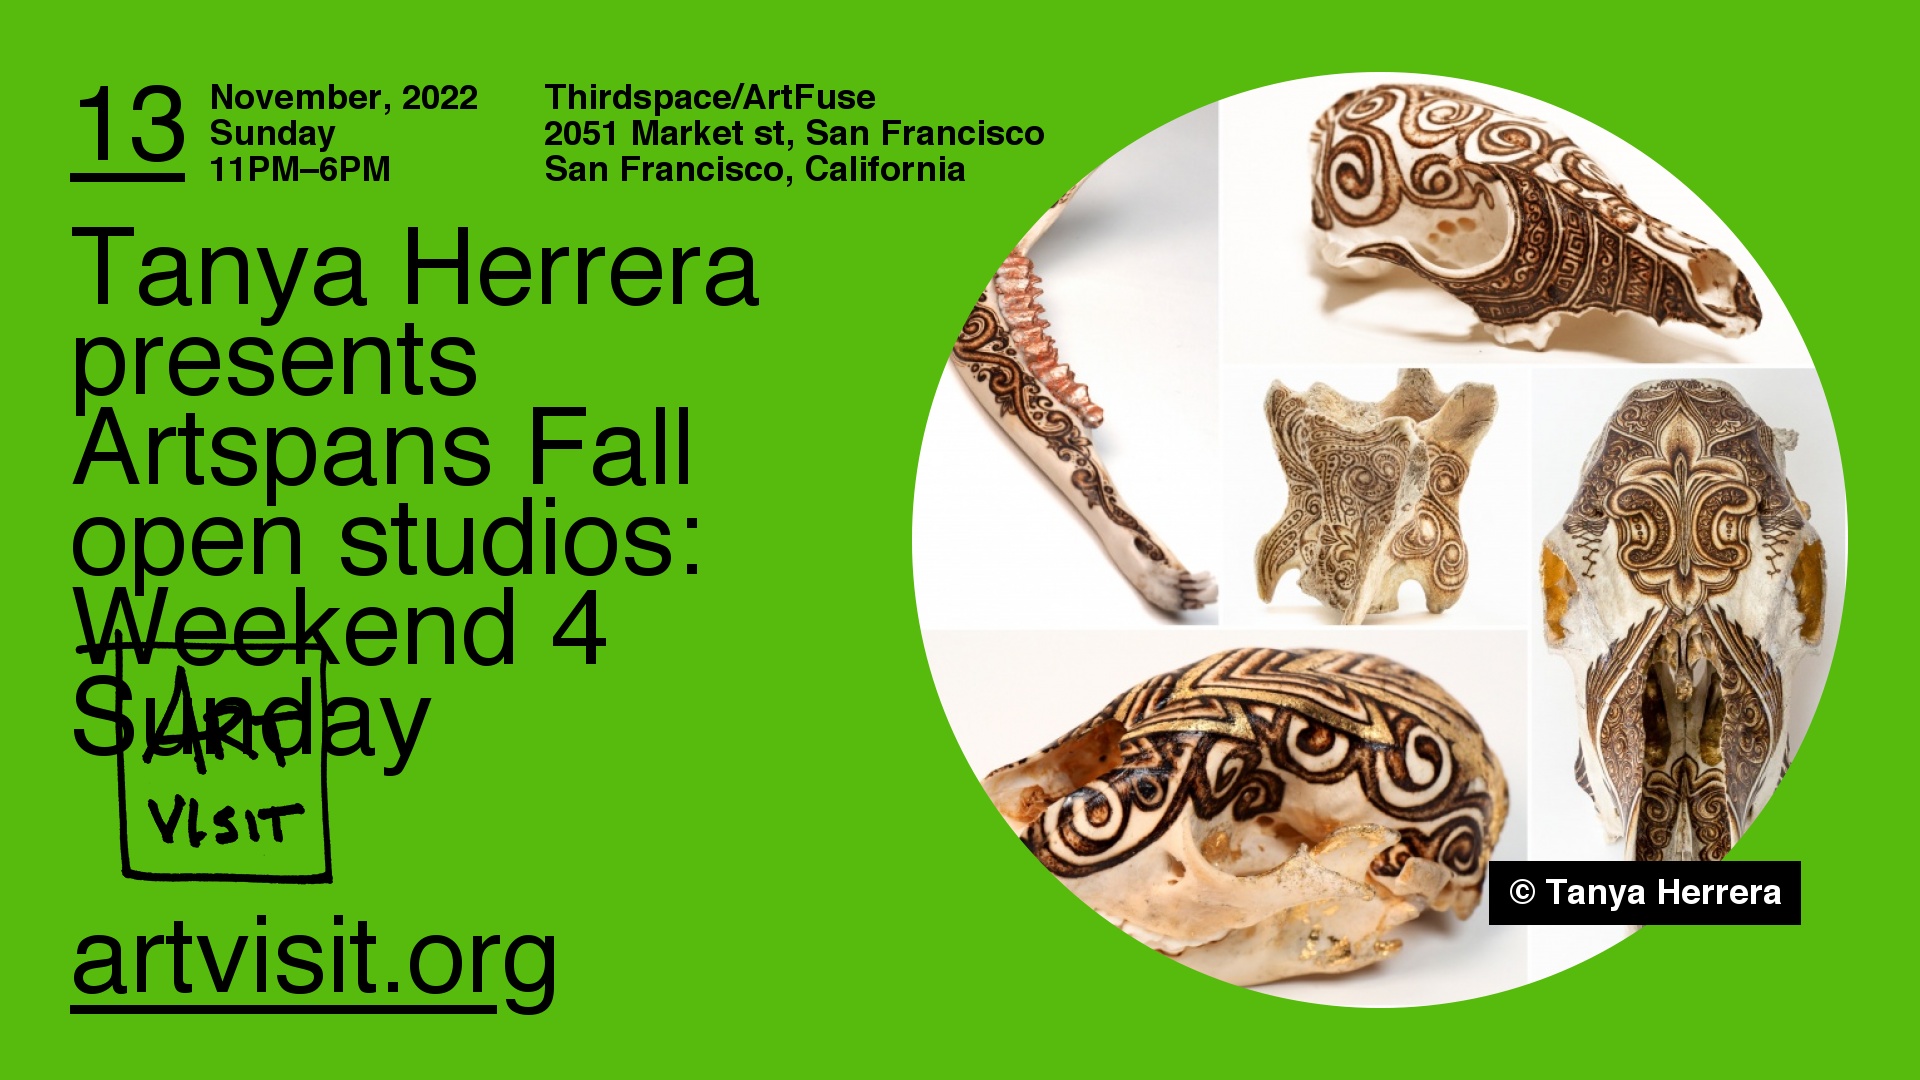 Tanya Herrera presents Artspans Fall open studios: Weekend 4 Sunday 